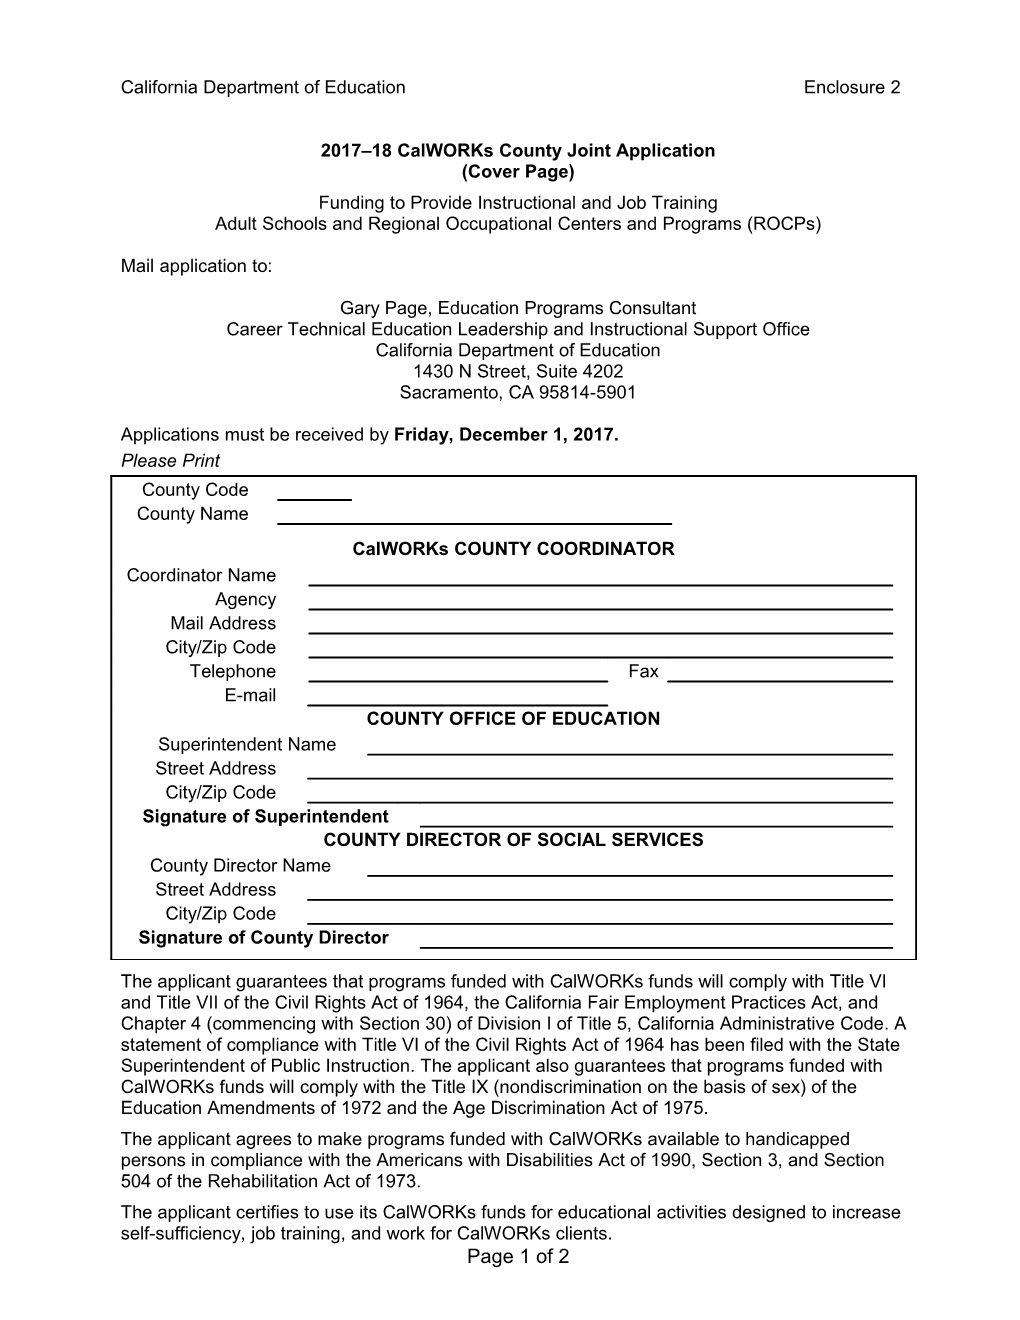 Form: Application 2017-18 - Calworks (CA Dept of Education)